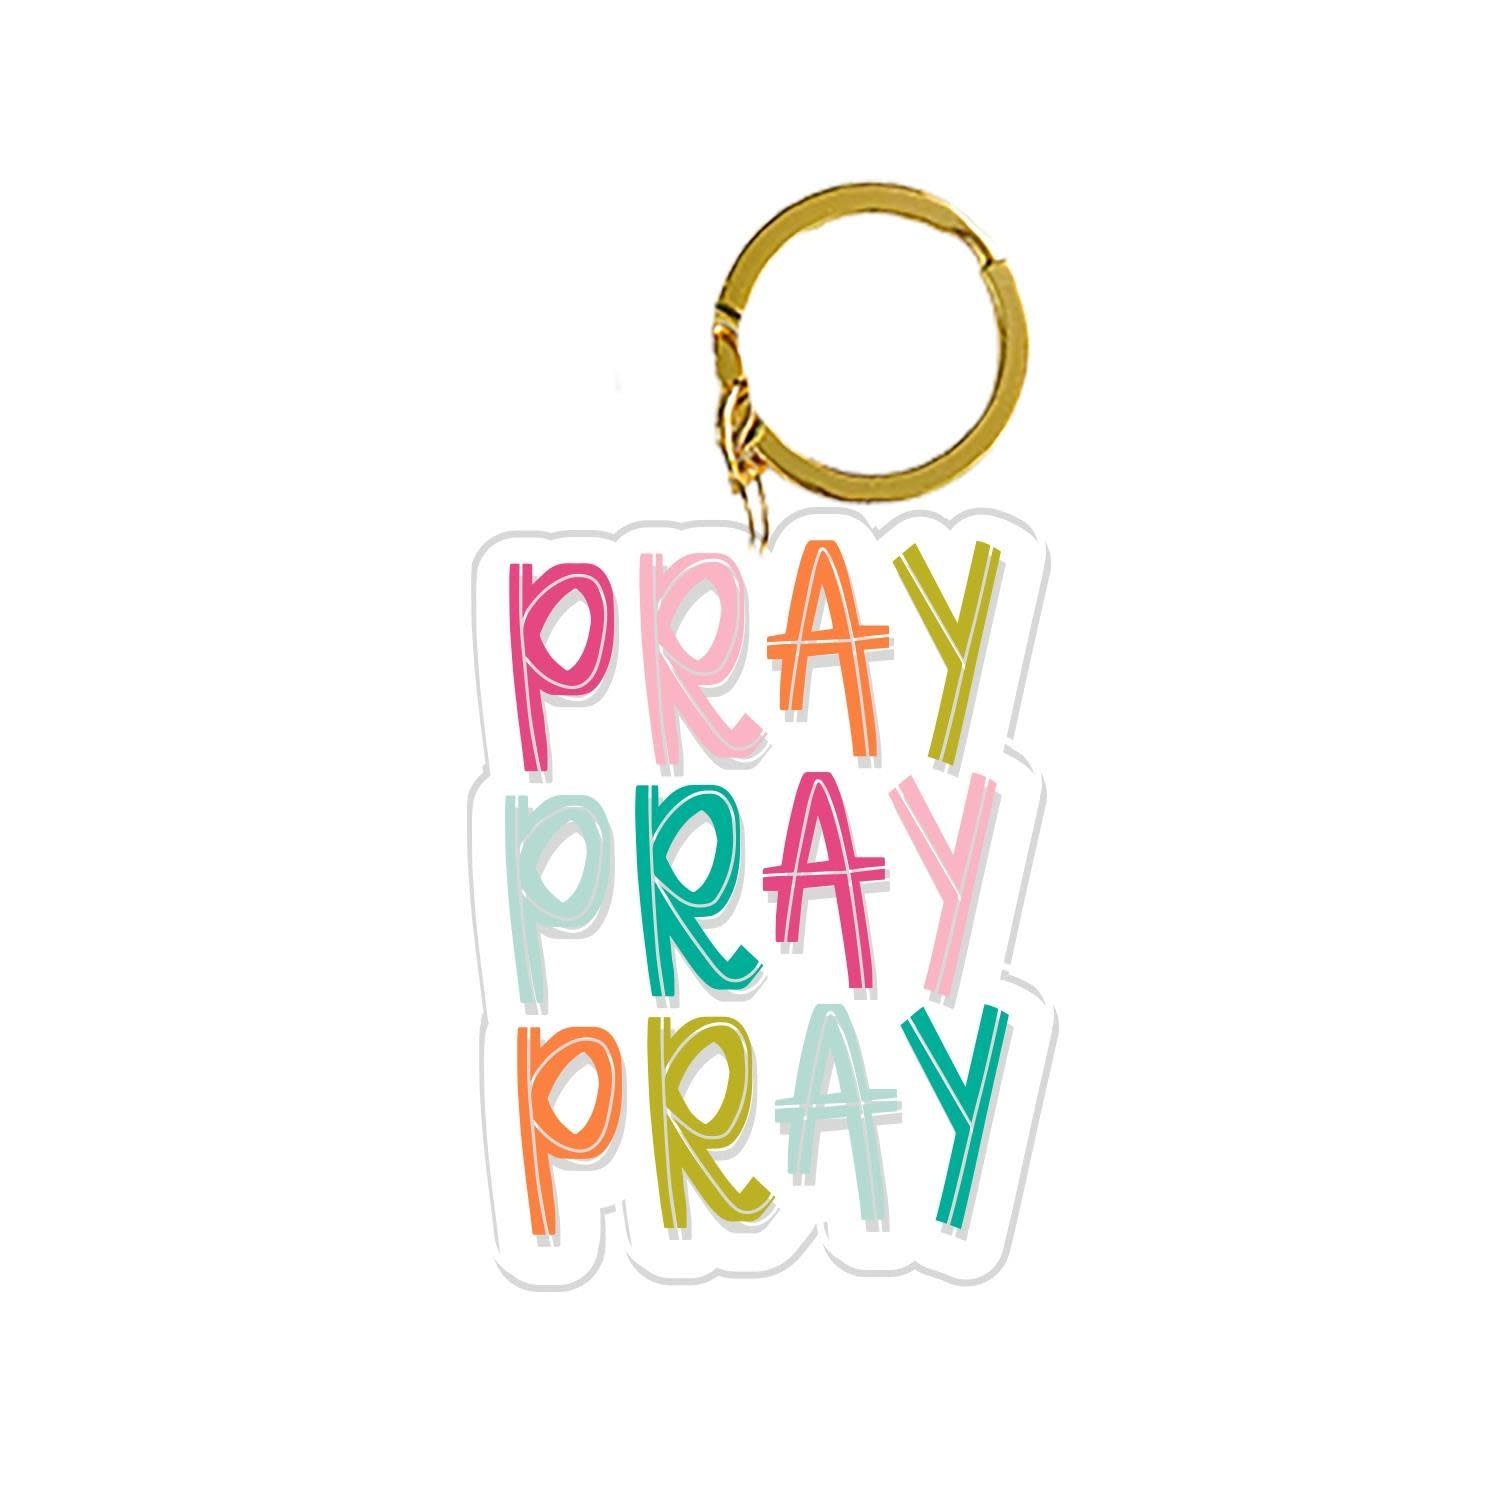 Pray Pray Pray Acrylic Key Chain